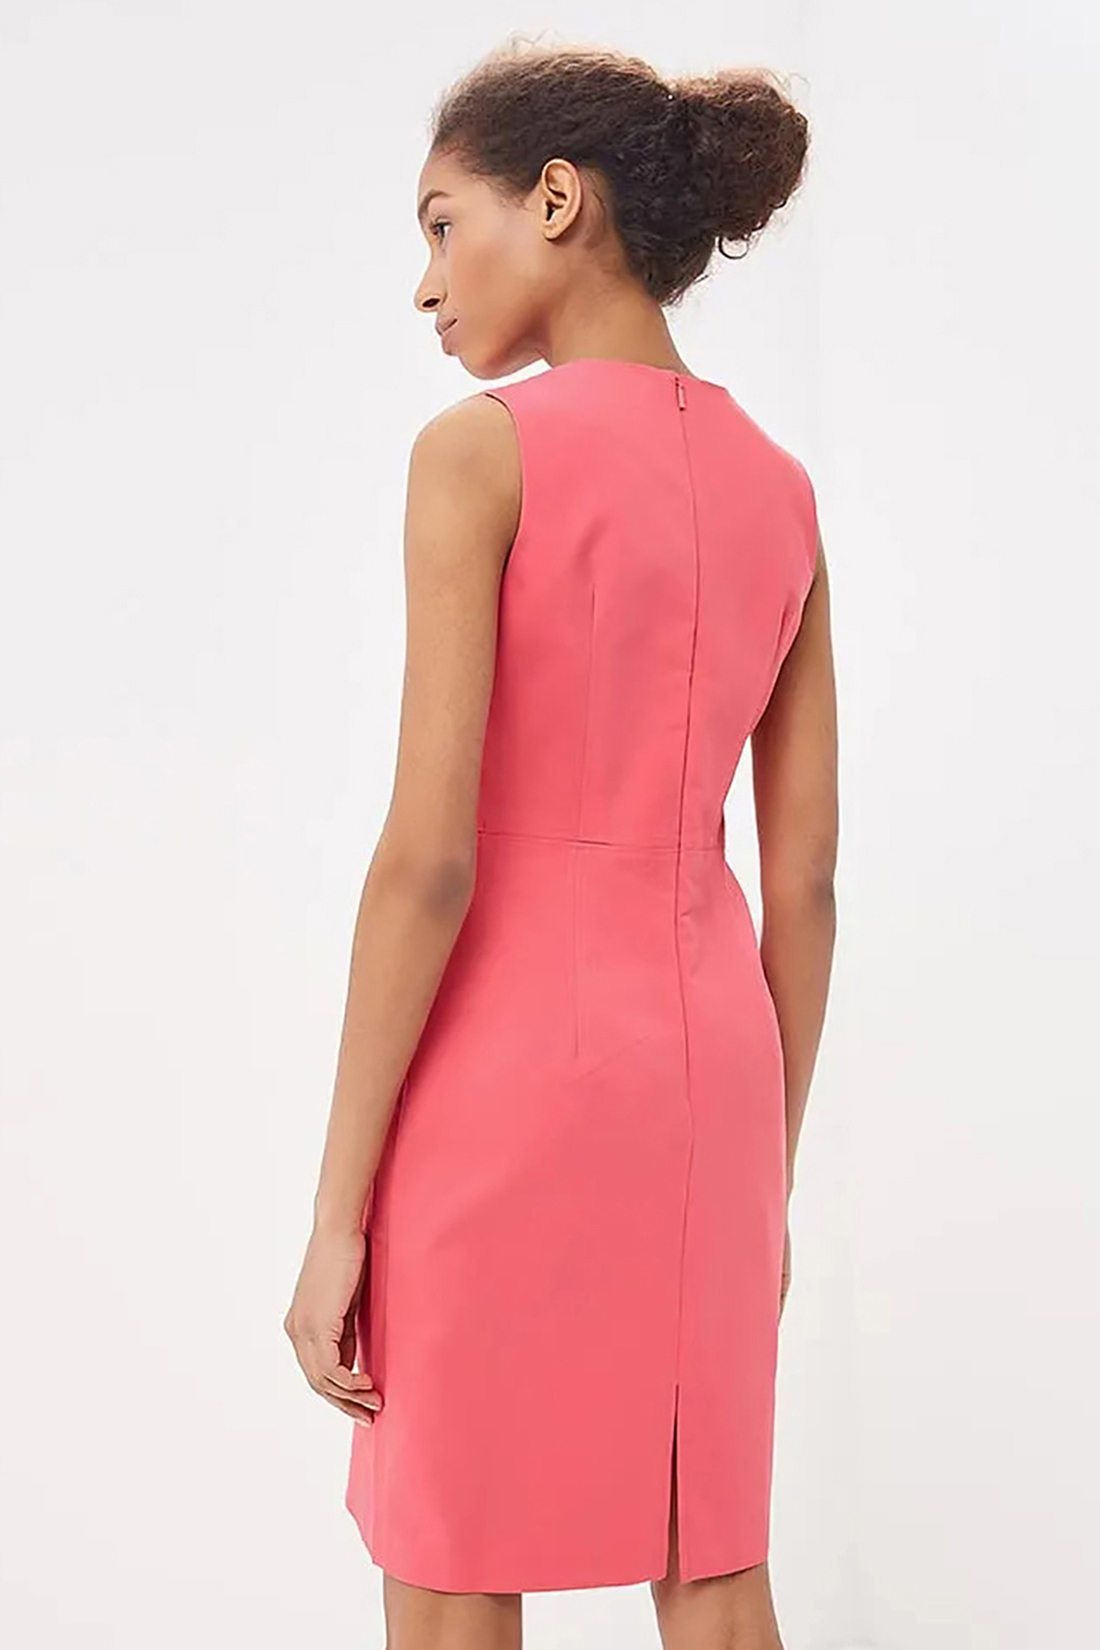 Платье-футляр (арт. baon B458044), размер L, цвет розовый Платье-футляр (арт. baon B458044) - фото 2